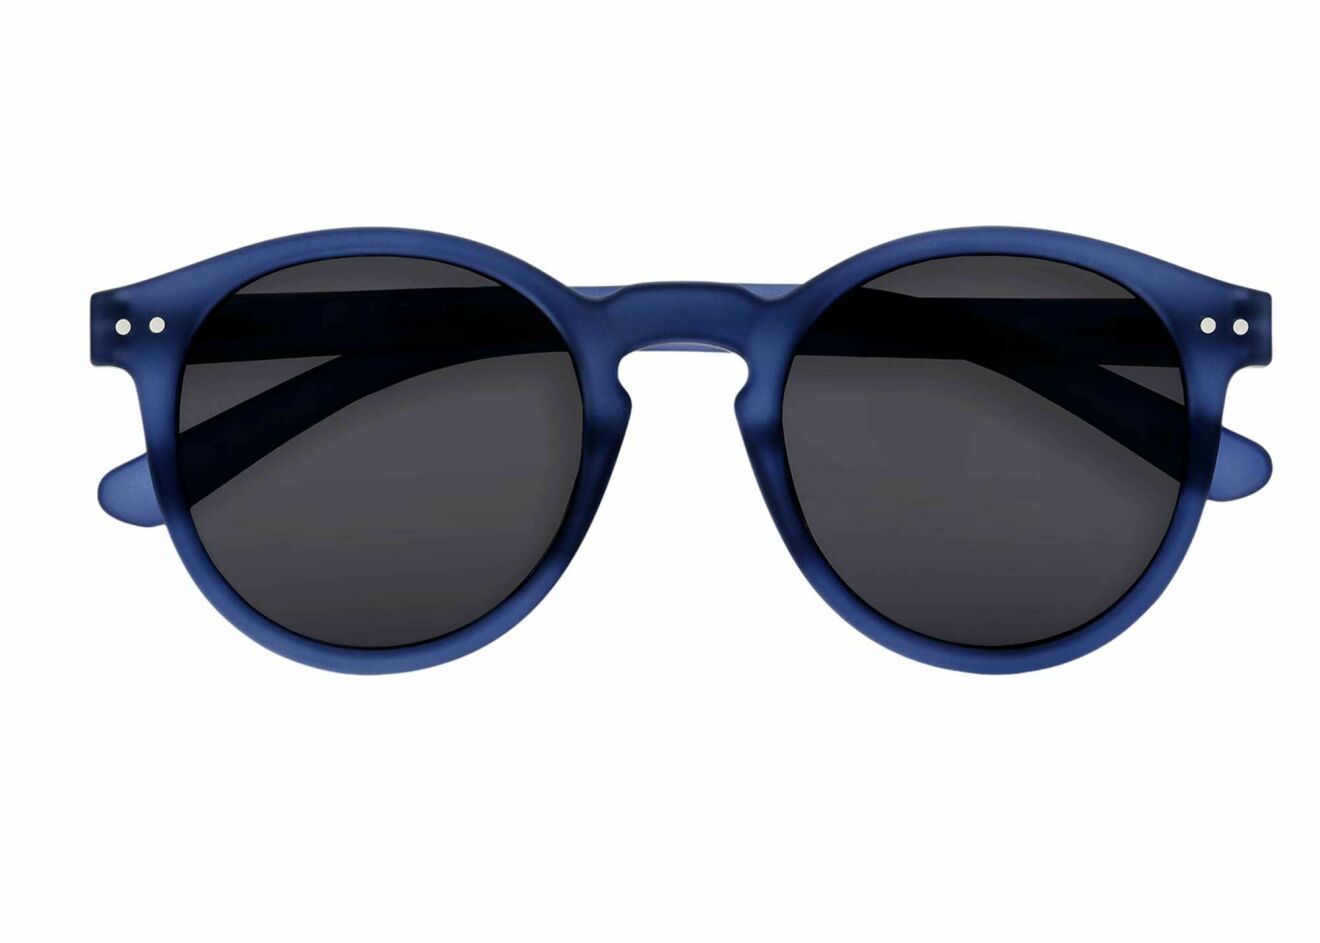 Blå solglasögon från Izipizi.